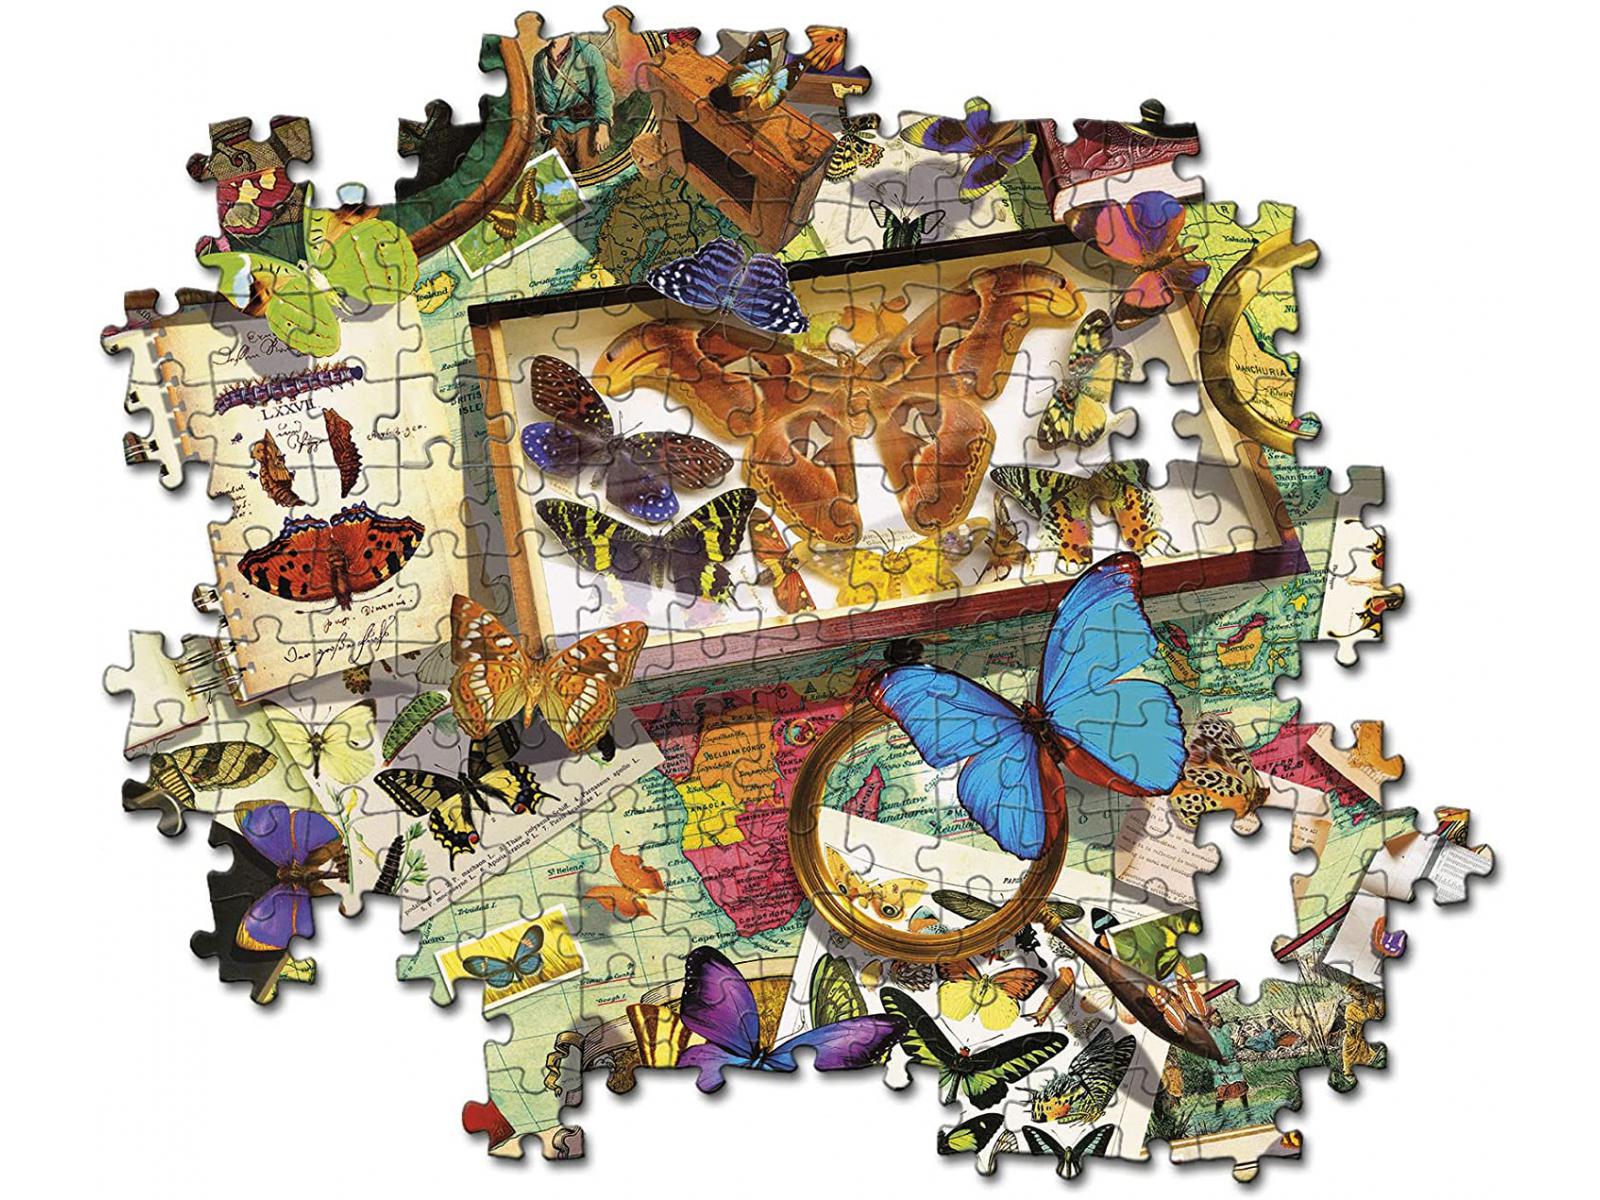 https://www.poupees-et-poupons.fr/image/476638/1600x1200/4/clementoni-35125-puzzle-adulte-500-pieces-the-butterfly-collector-1600.jpg